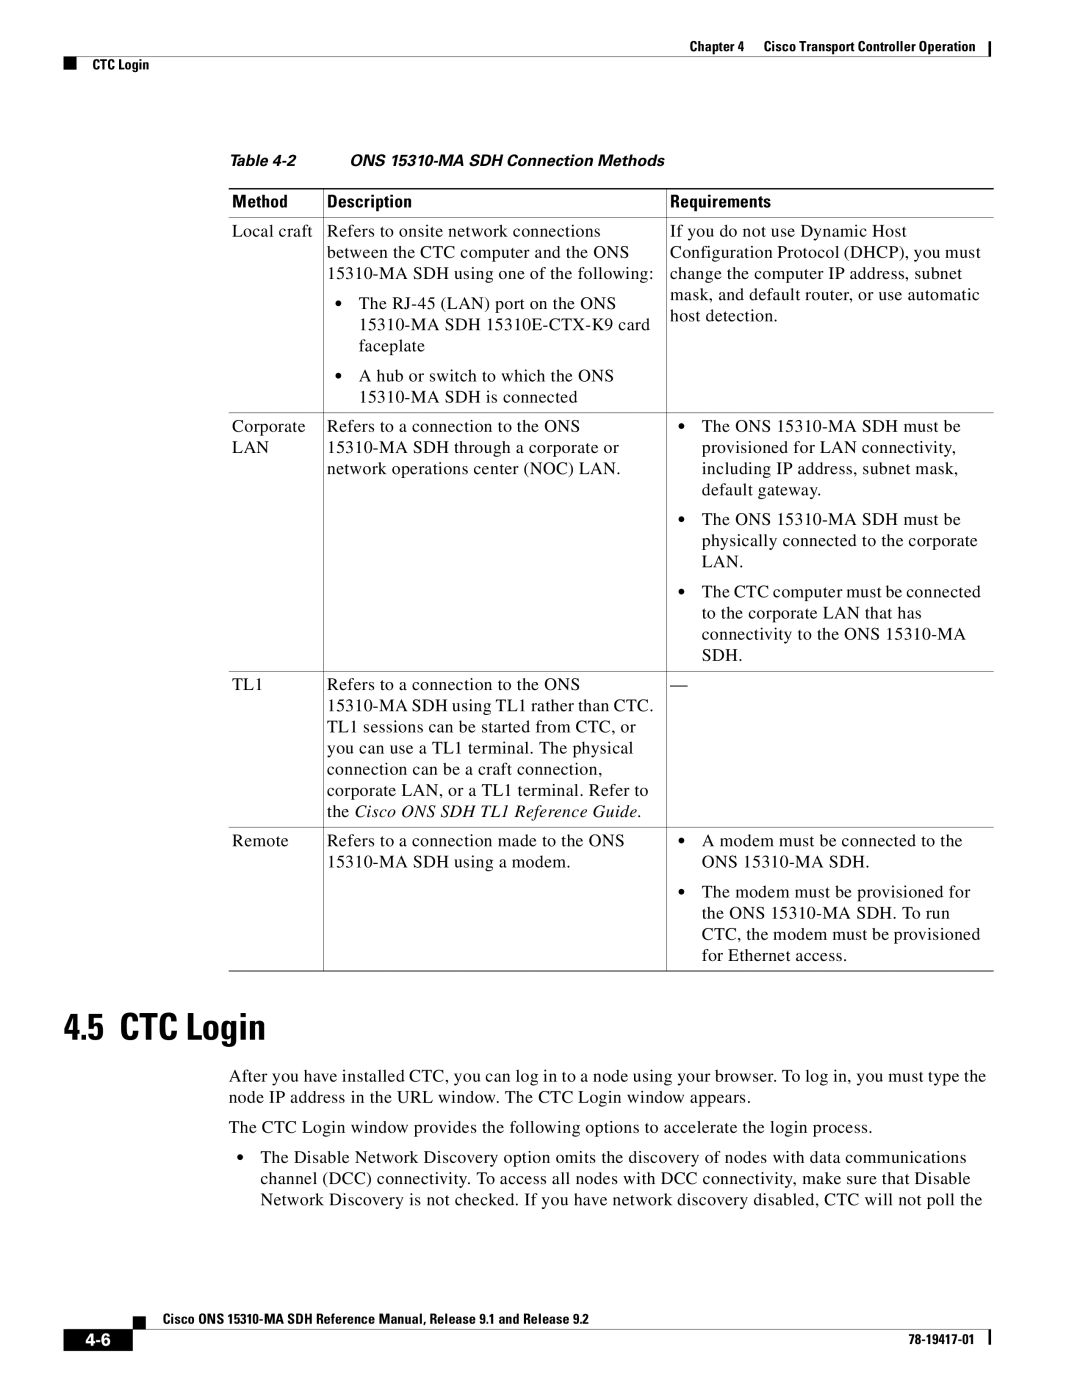 Cisco Systems 15310-MA manual CTC Login, Method Description Requirements, Lan, Sdh, TL1 